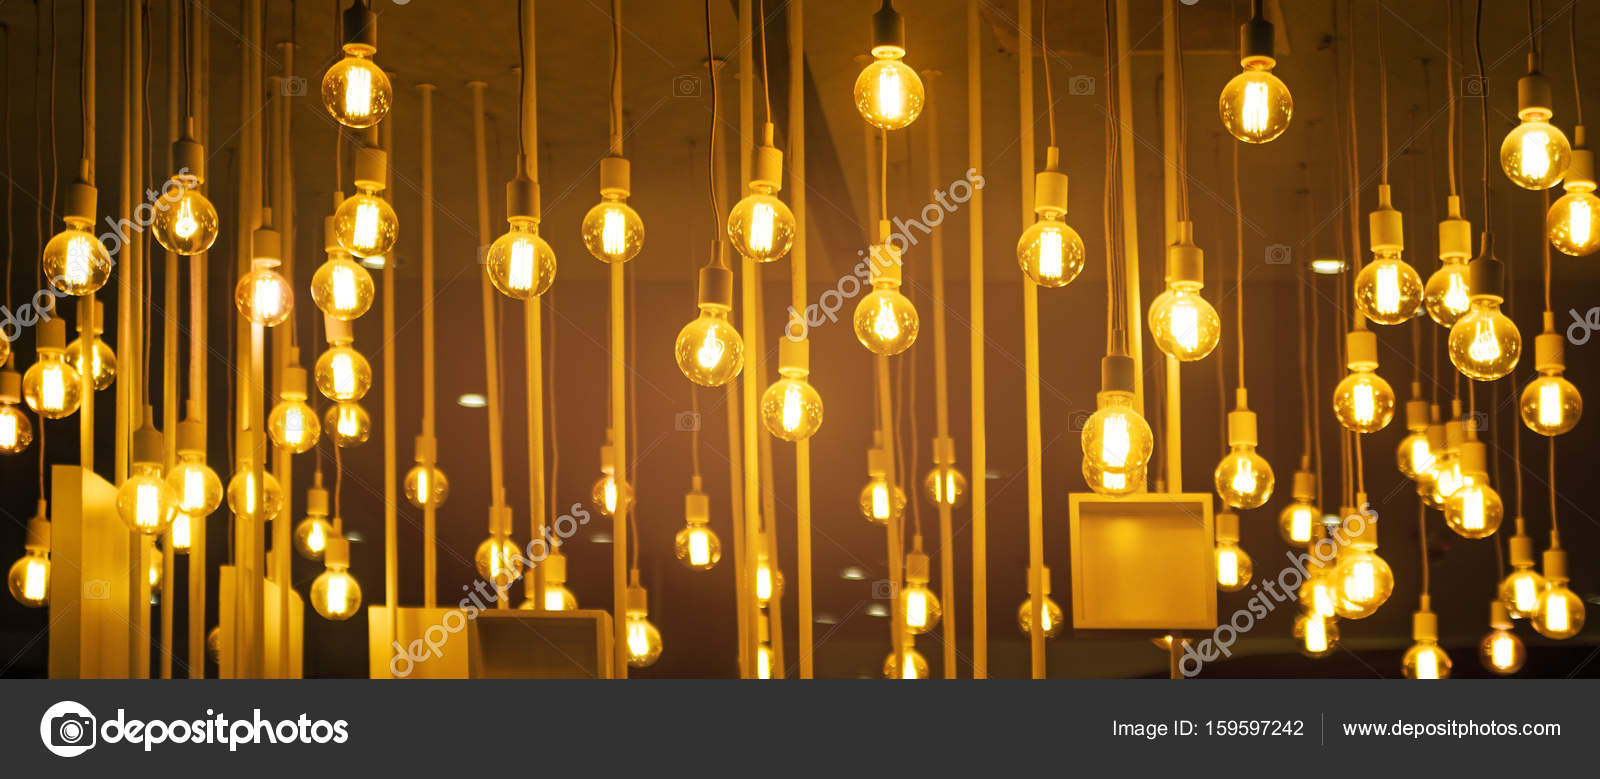 Light Bulbs For Ceiling Decoration Stock Photo C Konradbak